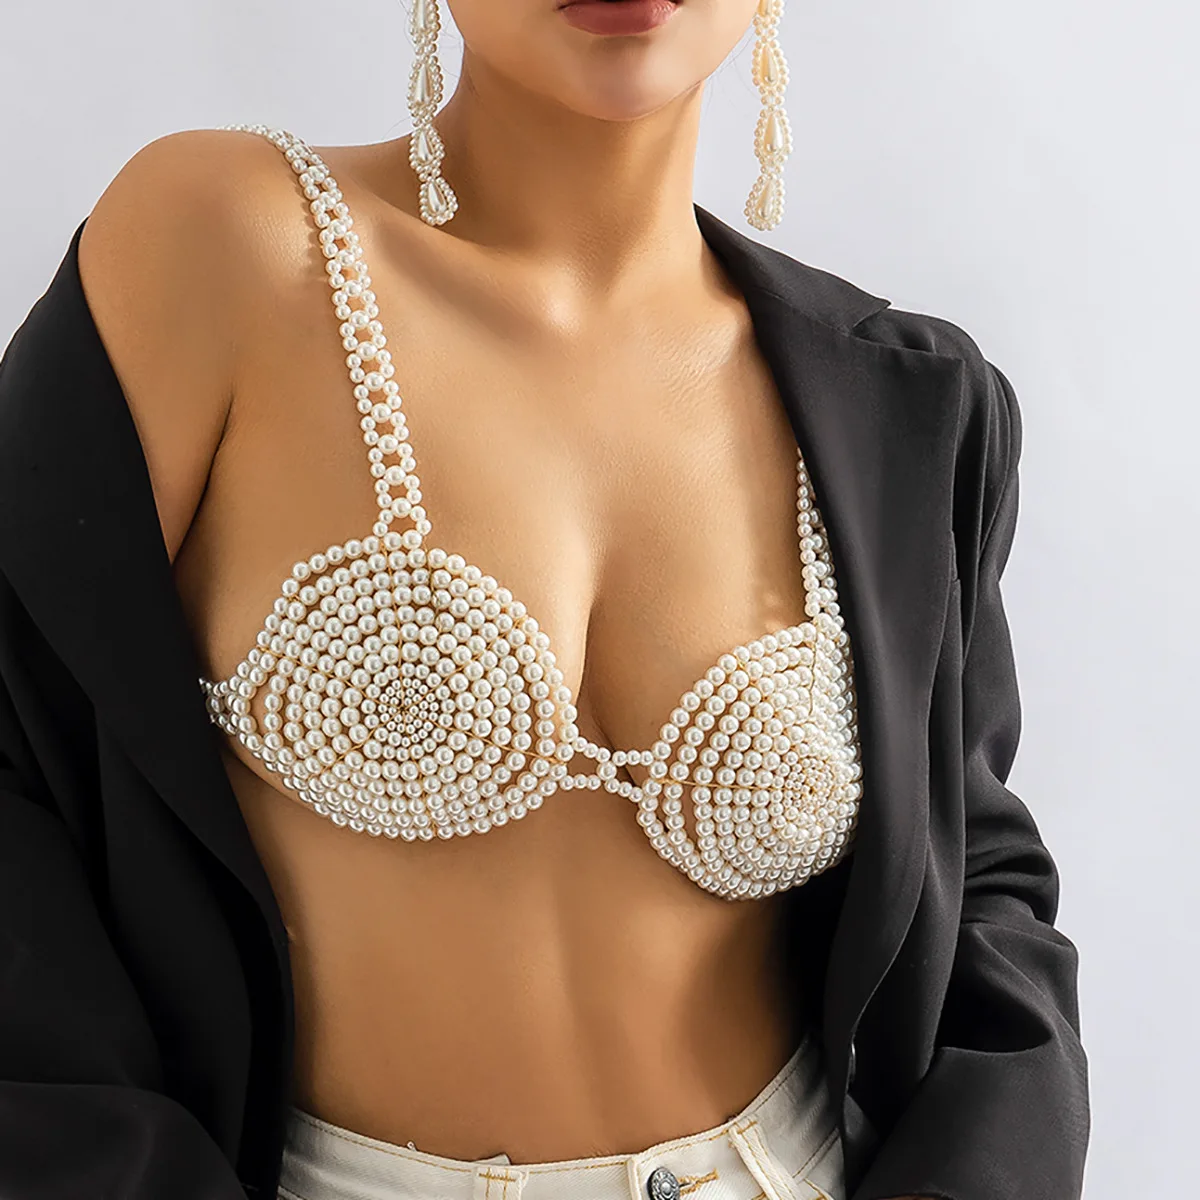 Female Nightclub Sexy Rhinestone Bra Lingerie Jewelry Accessories Luxury Shiny Full Diamond Underwear Sets